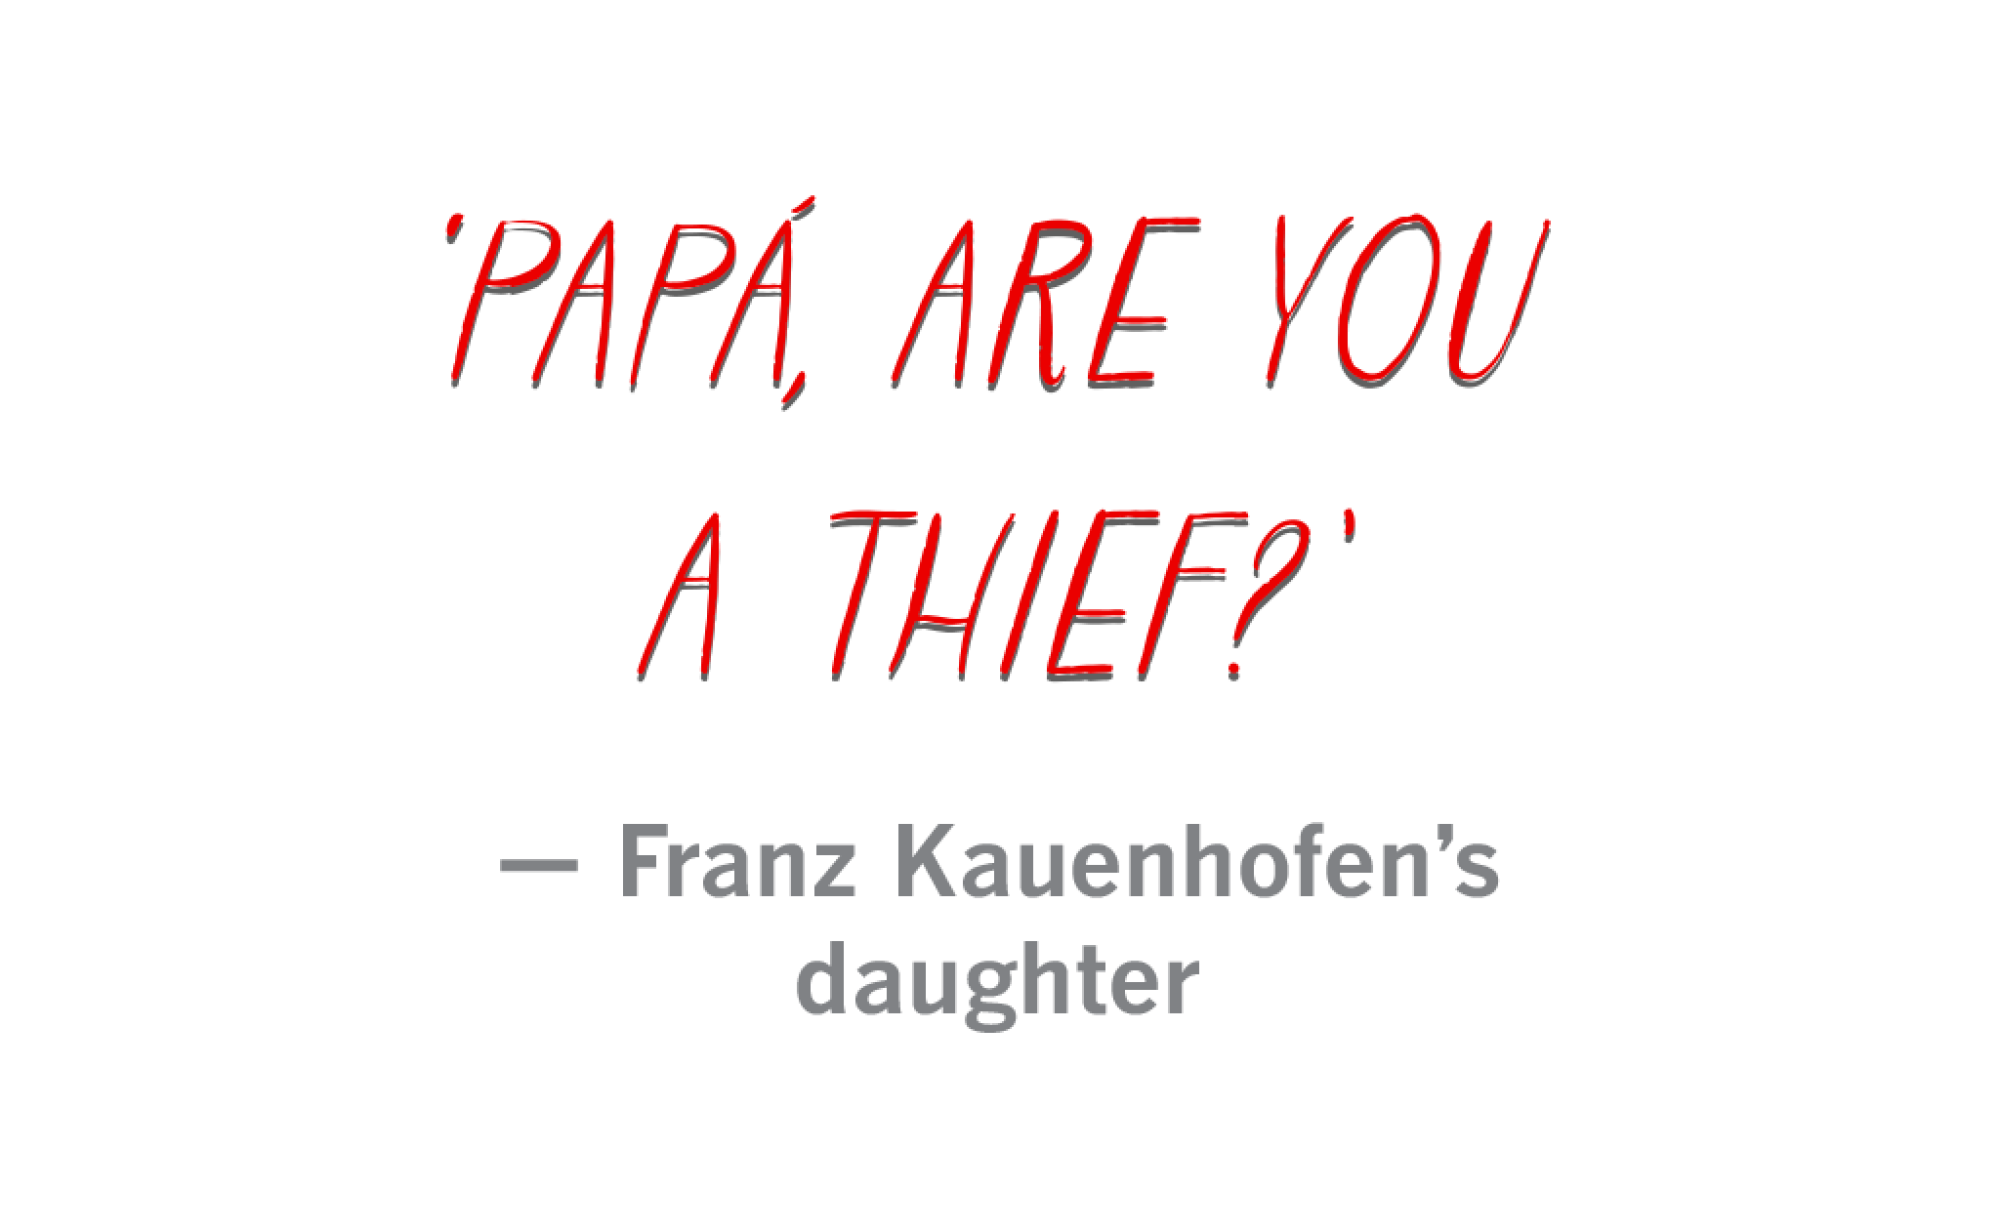 "Papá, are you a thief?"